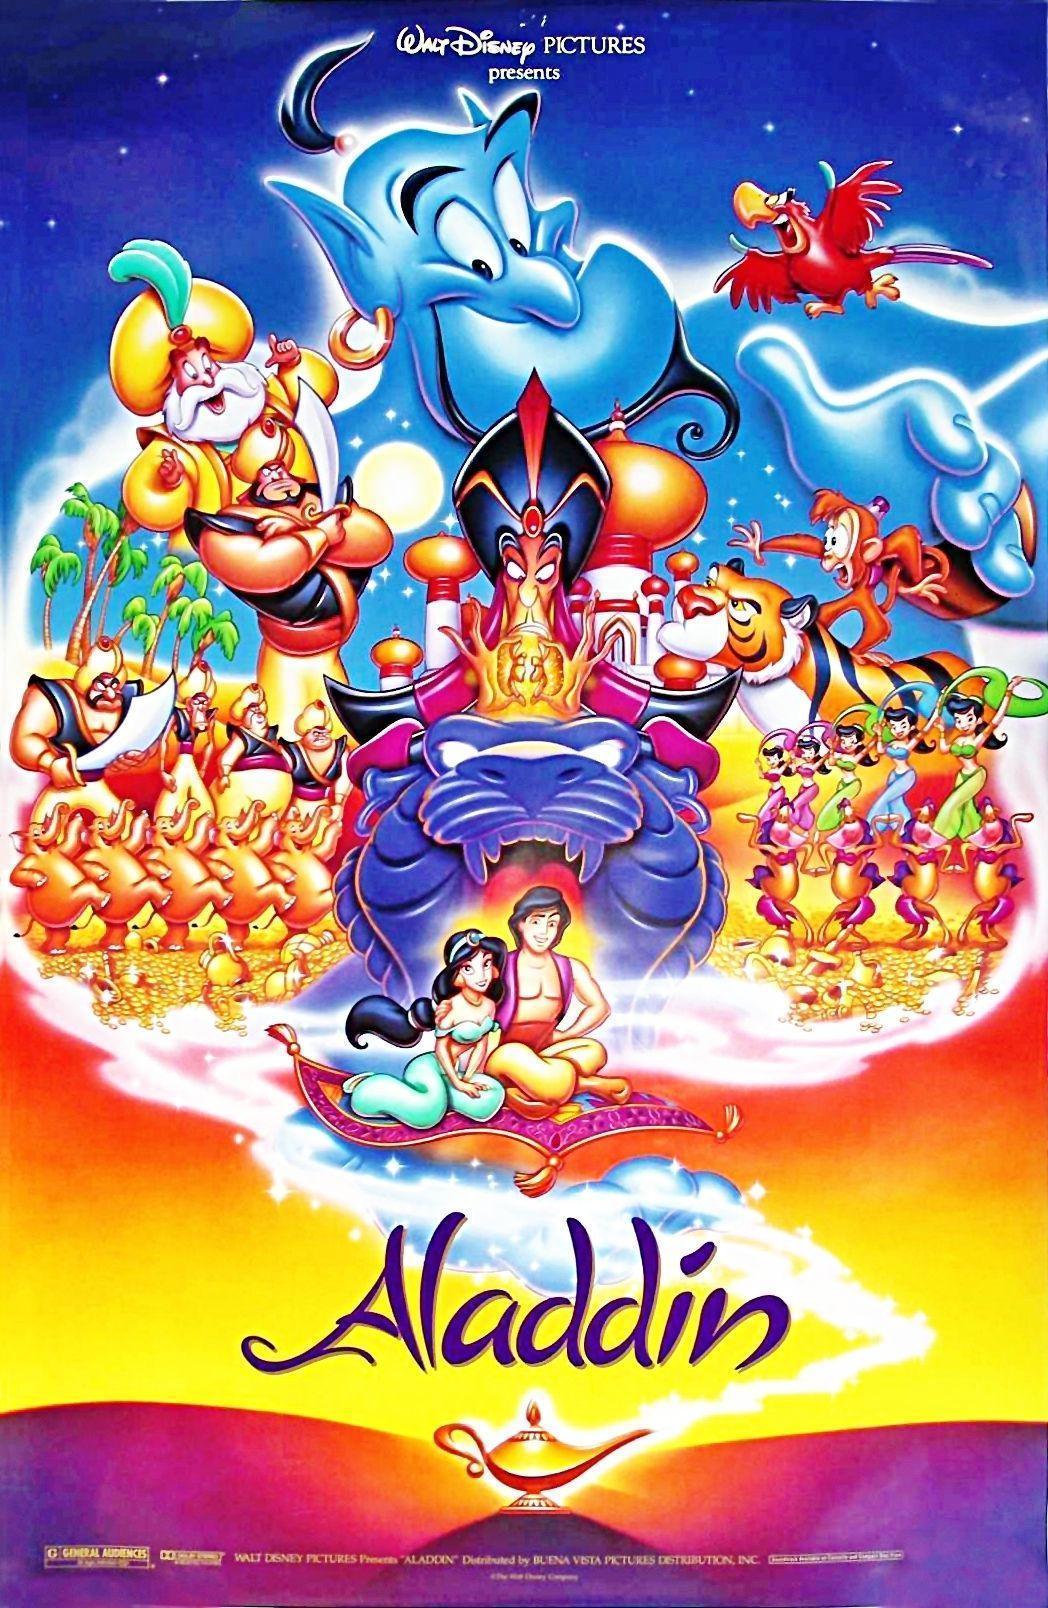 Aladdin Poster Disney Full HD Wallpaper for Mac